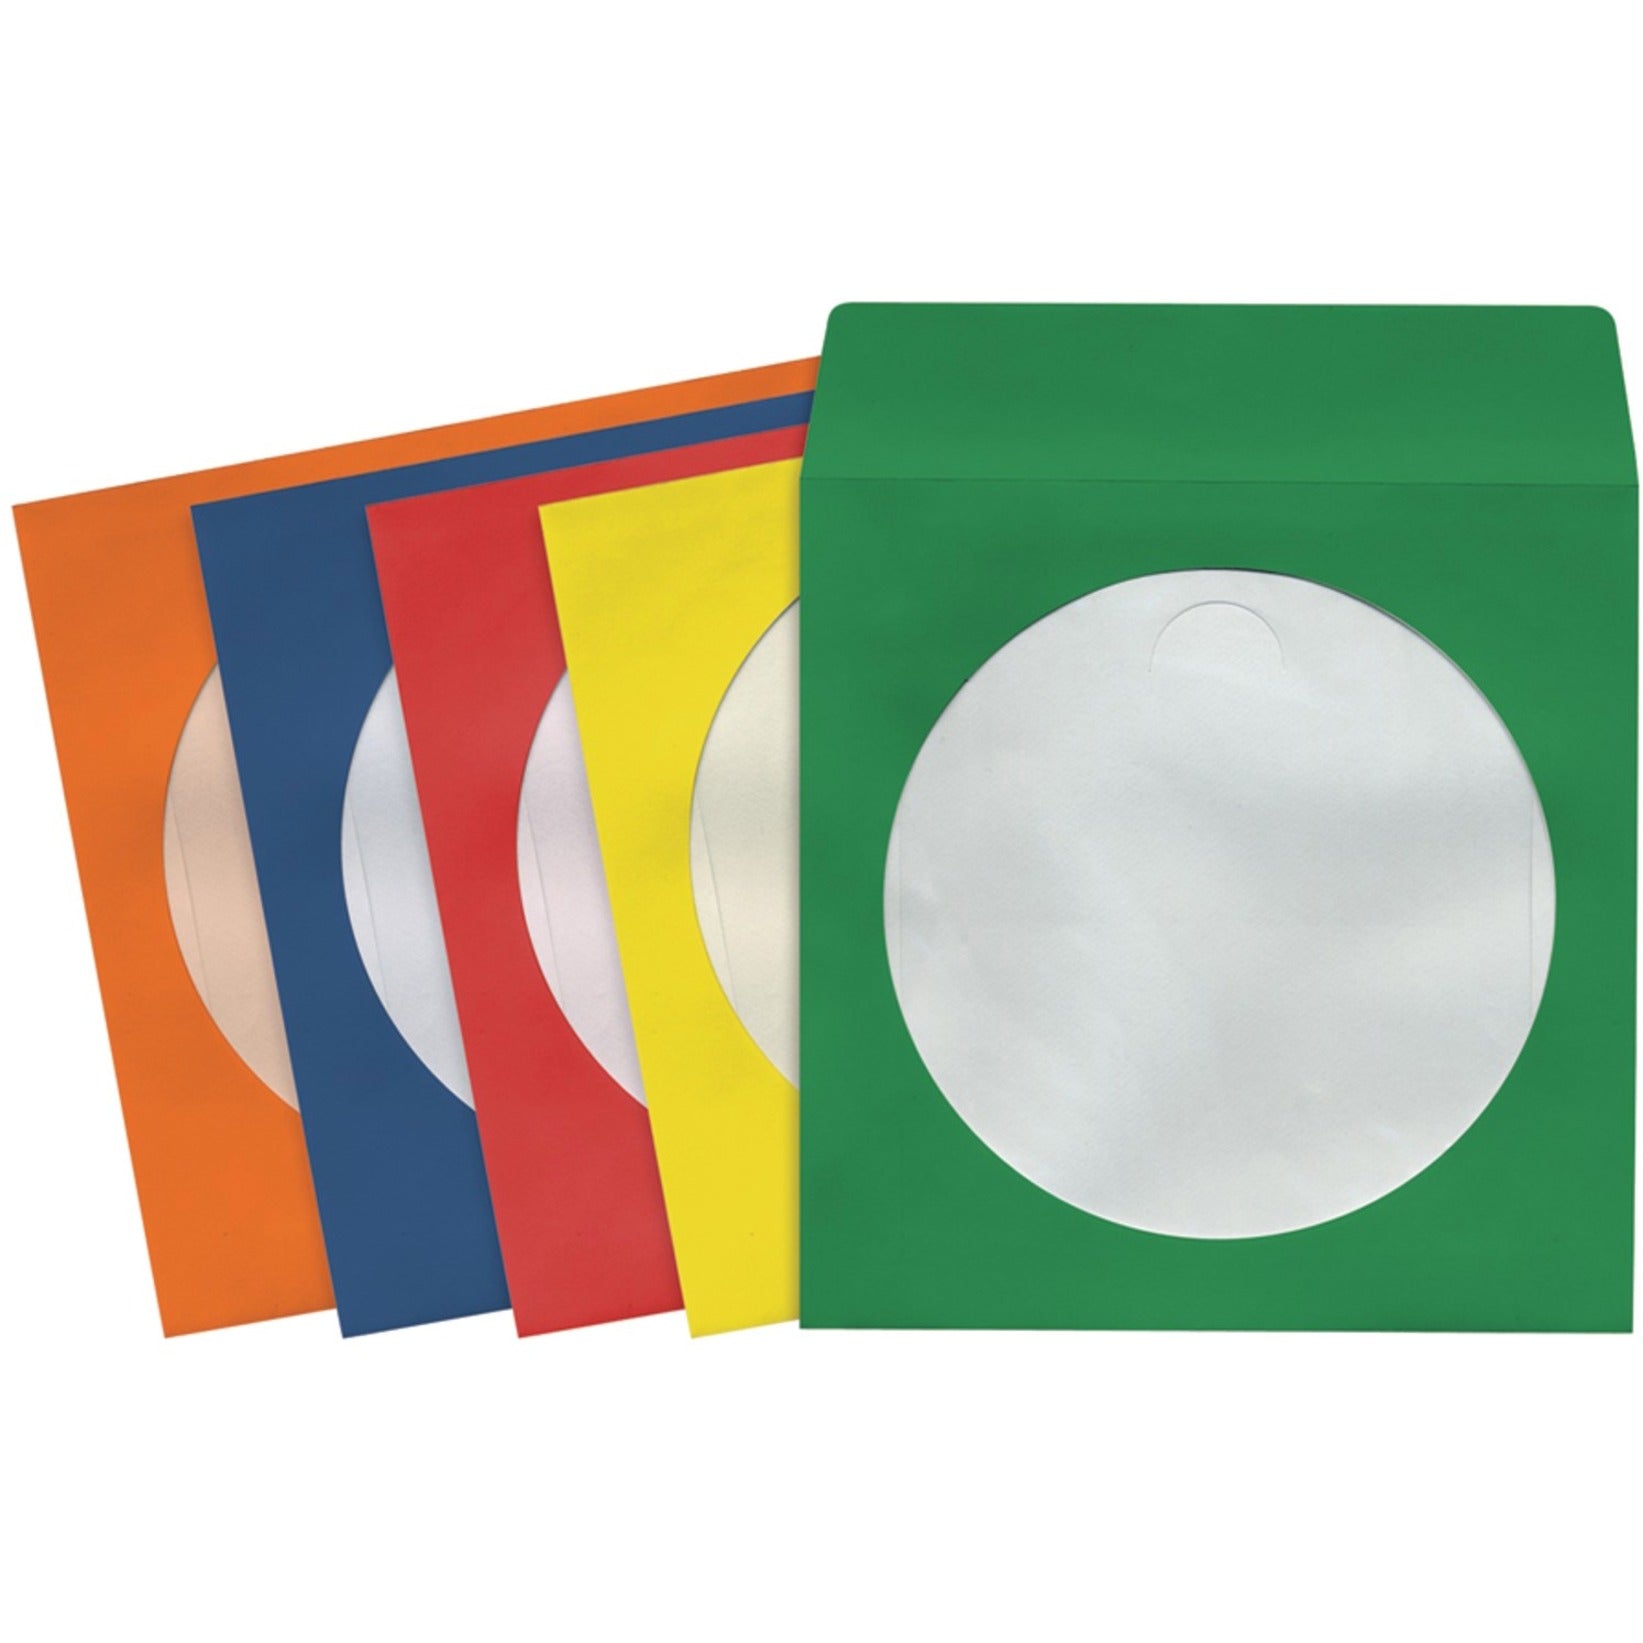 Maxell 190132 - CD403 CD/DVD Aufbewahrungshüllen Packung mit 100 Schiebeeinschub Verschiedene Farben